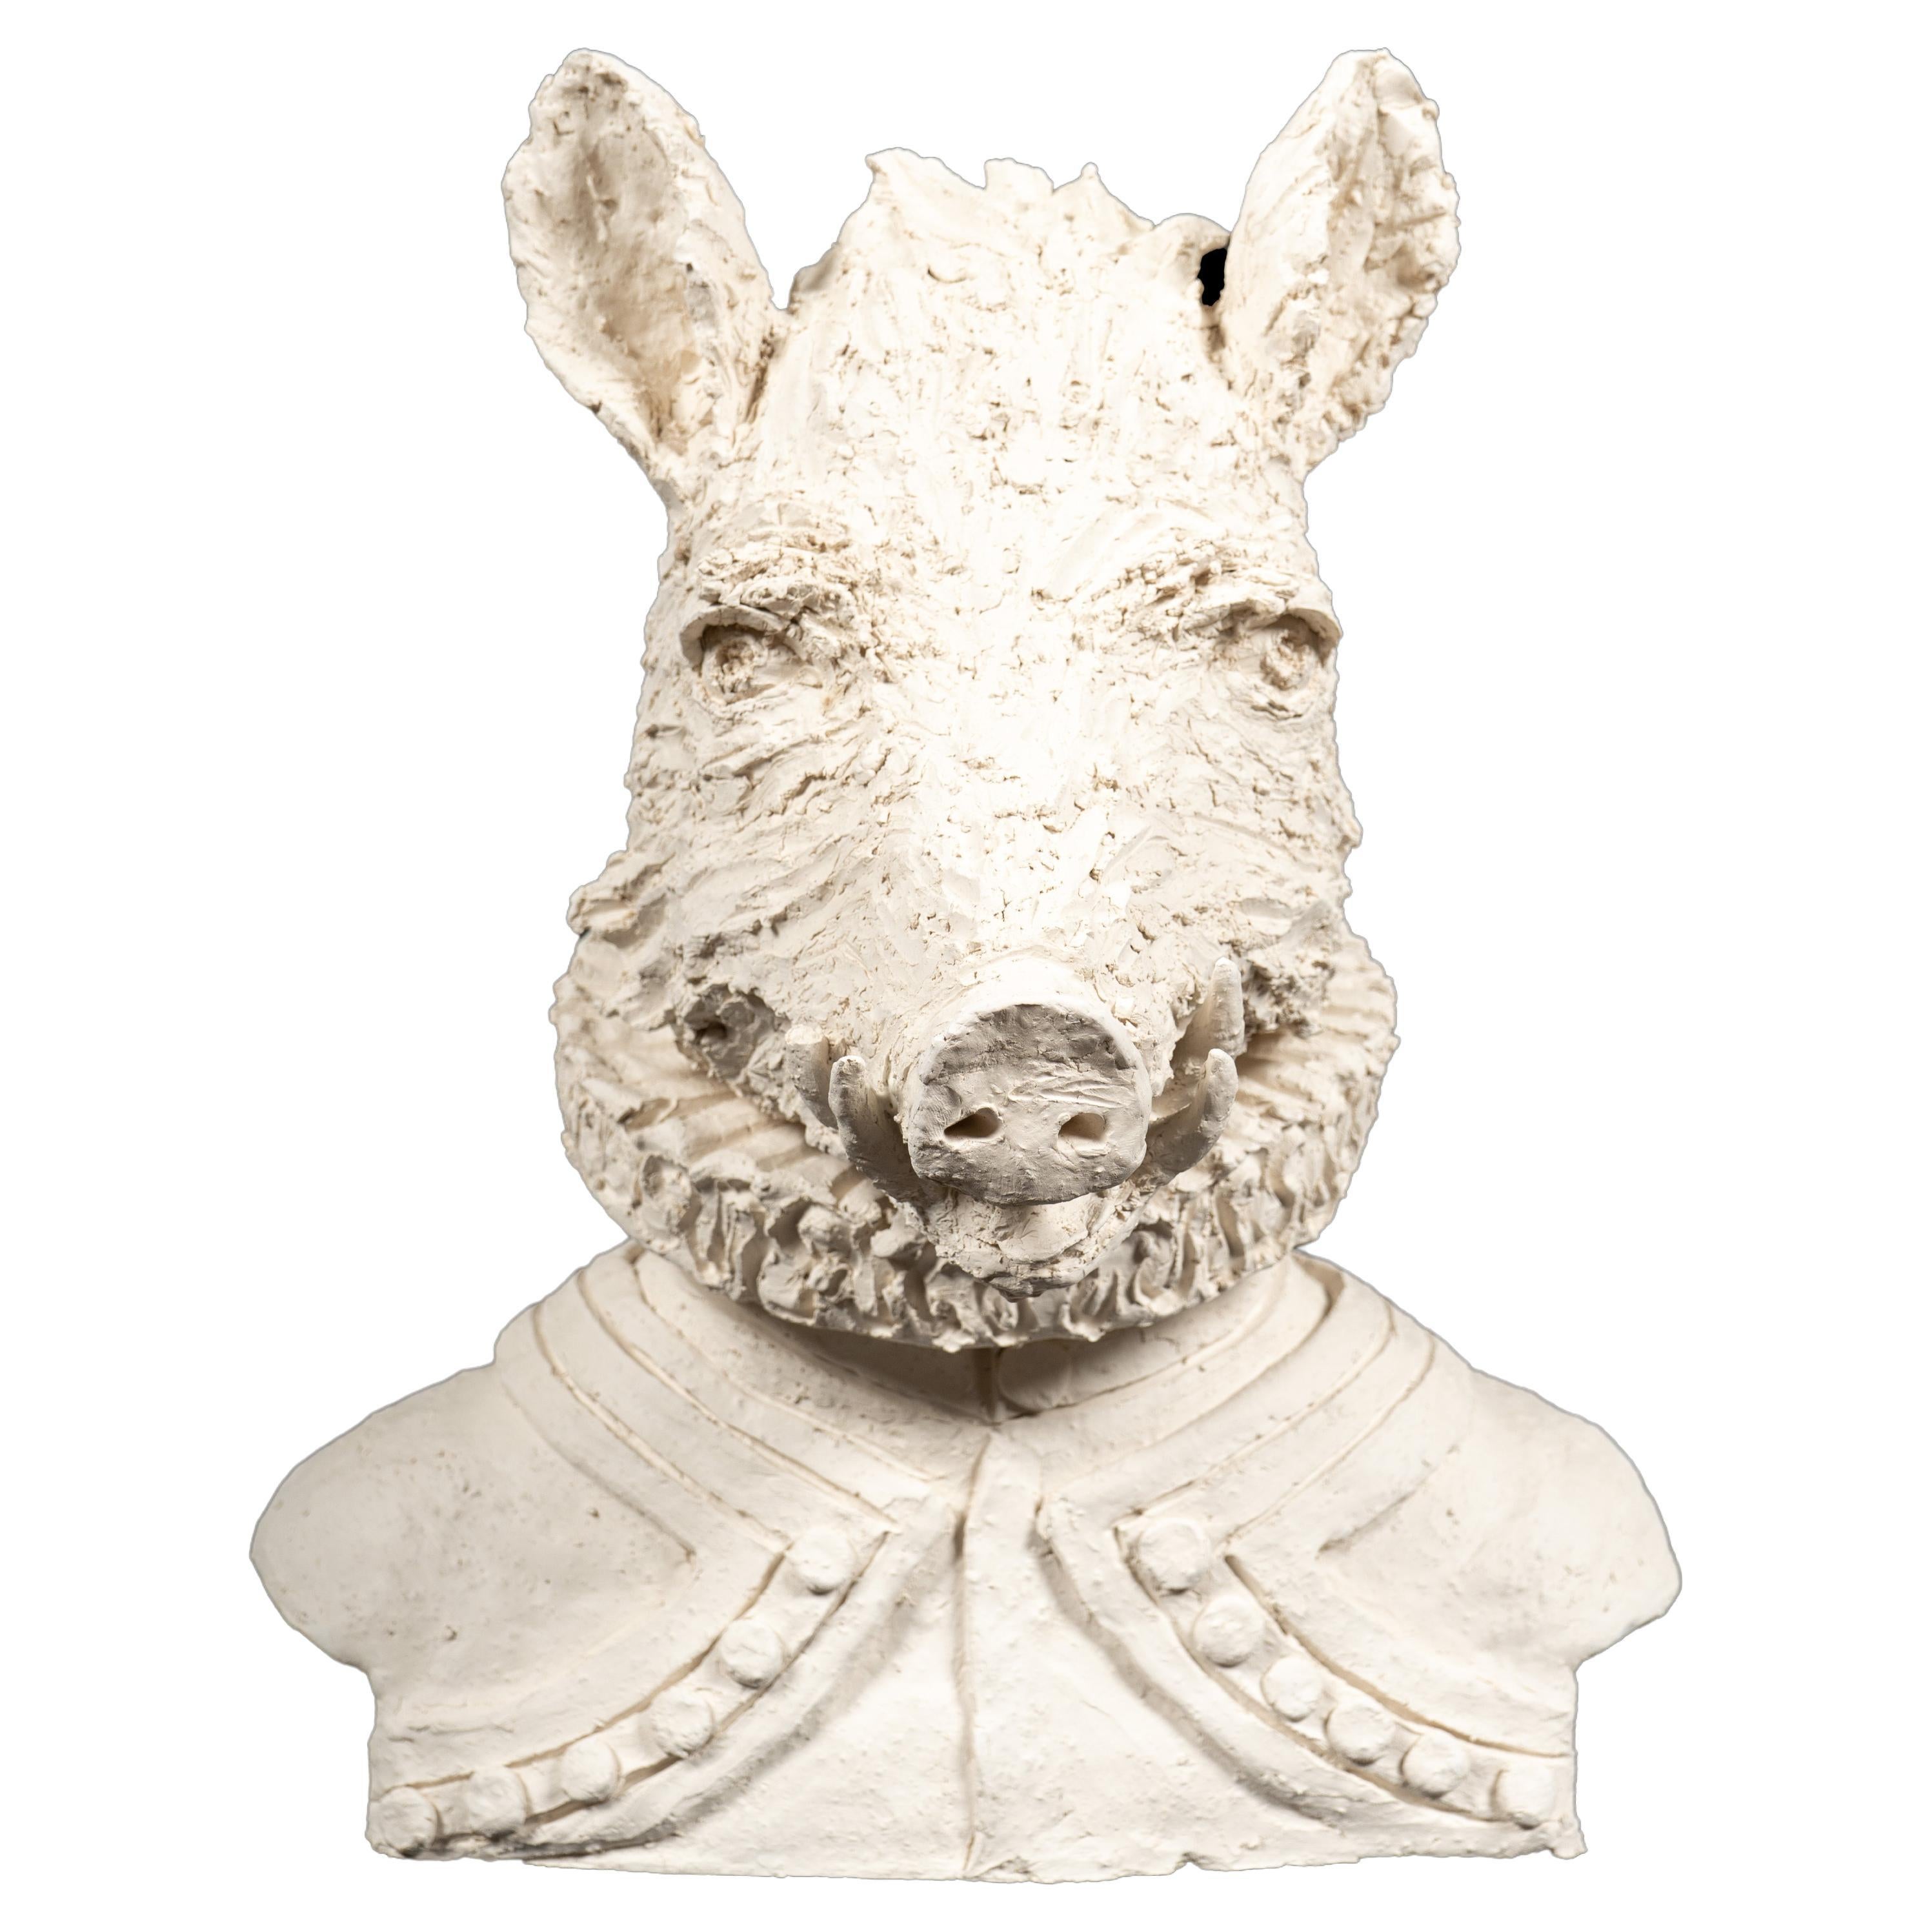 Anthropomorphic Terracotta Bust of a Boar wearing a Ruff